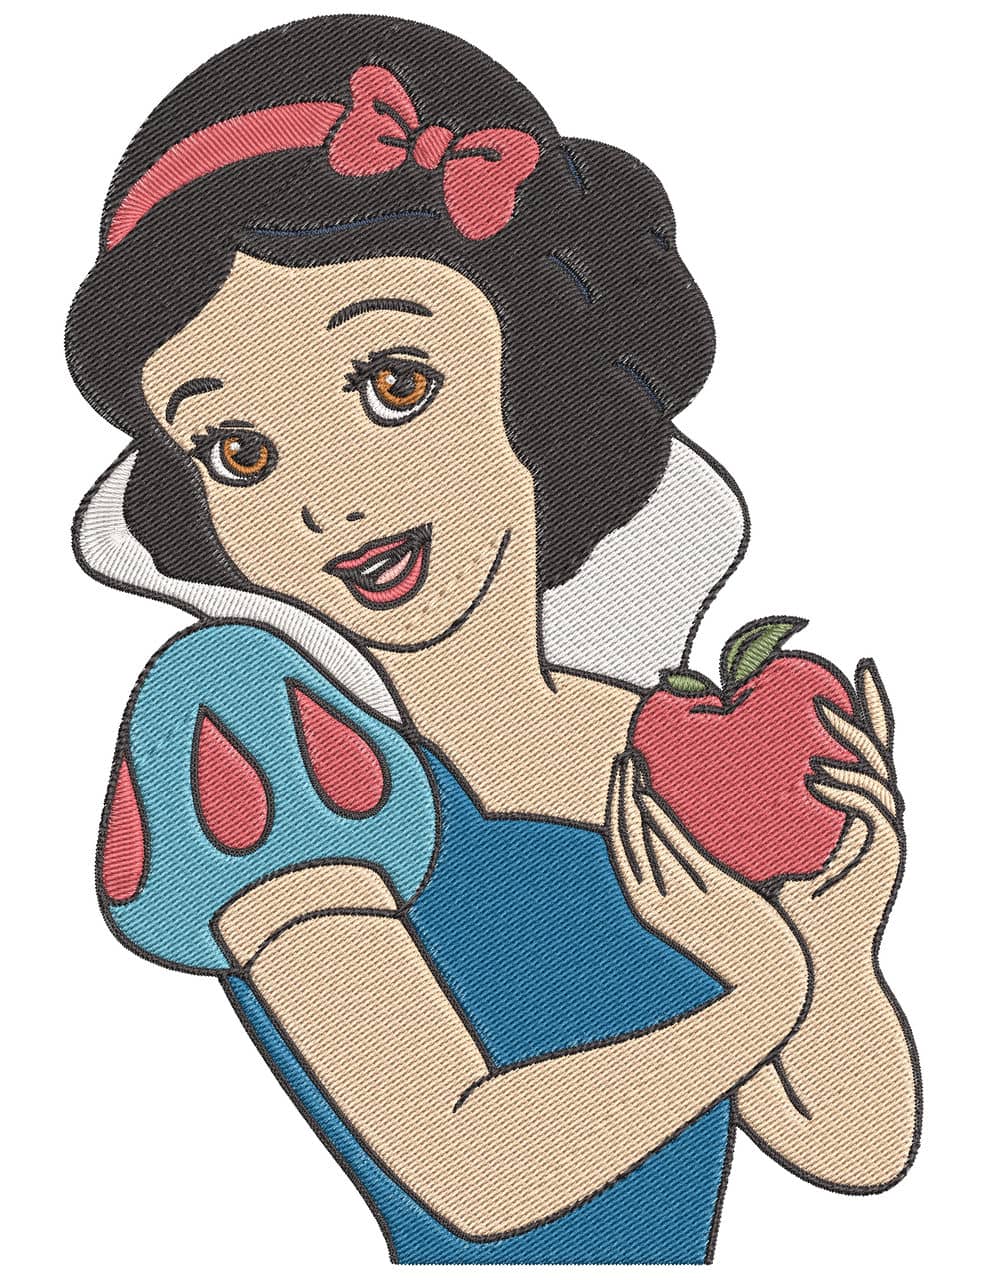 Snow White Princess Disney Seven Dwarfs Embroidery Design 036 Digital Embroidery Designs 